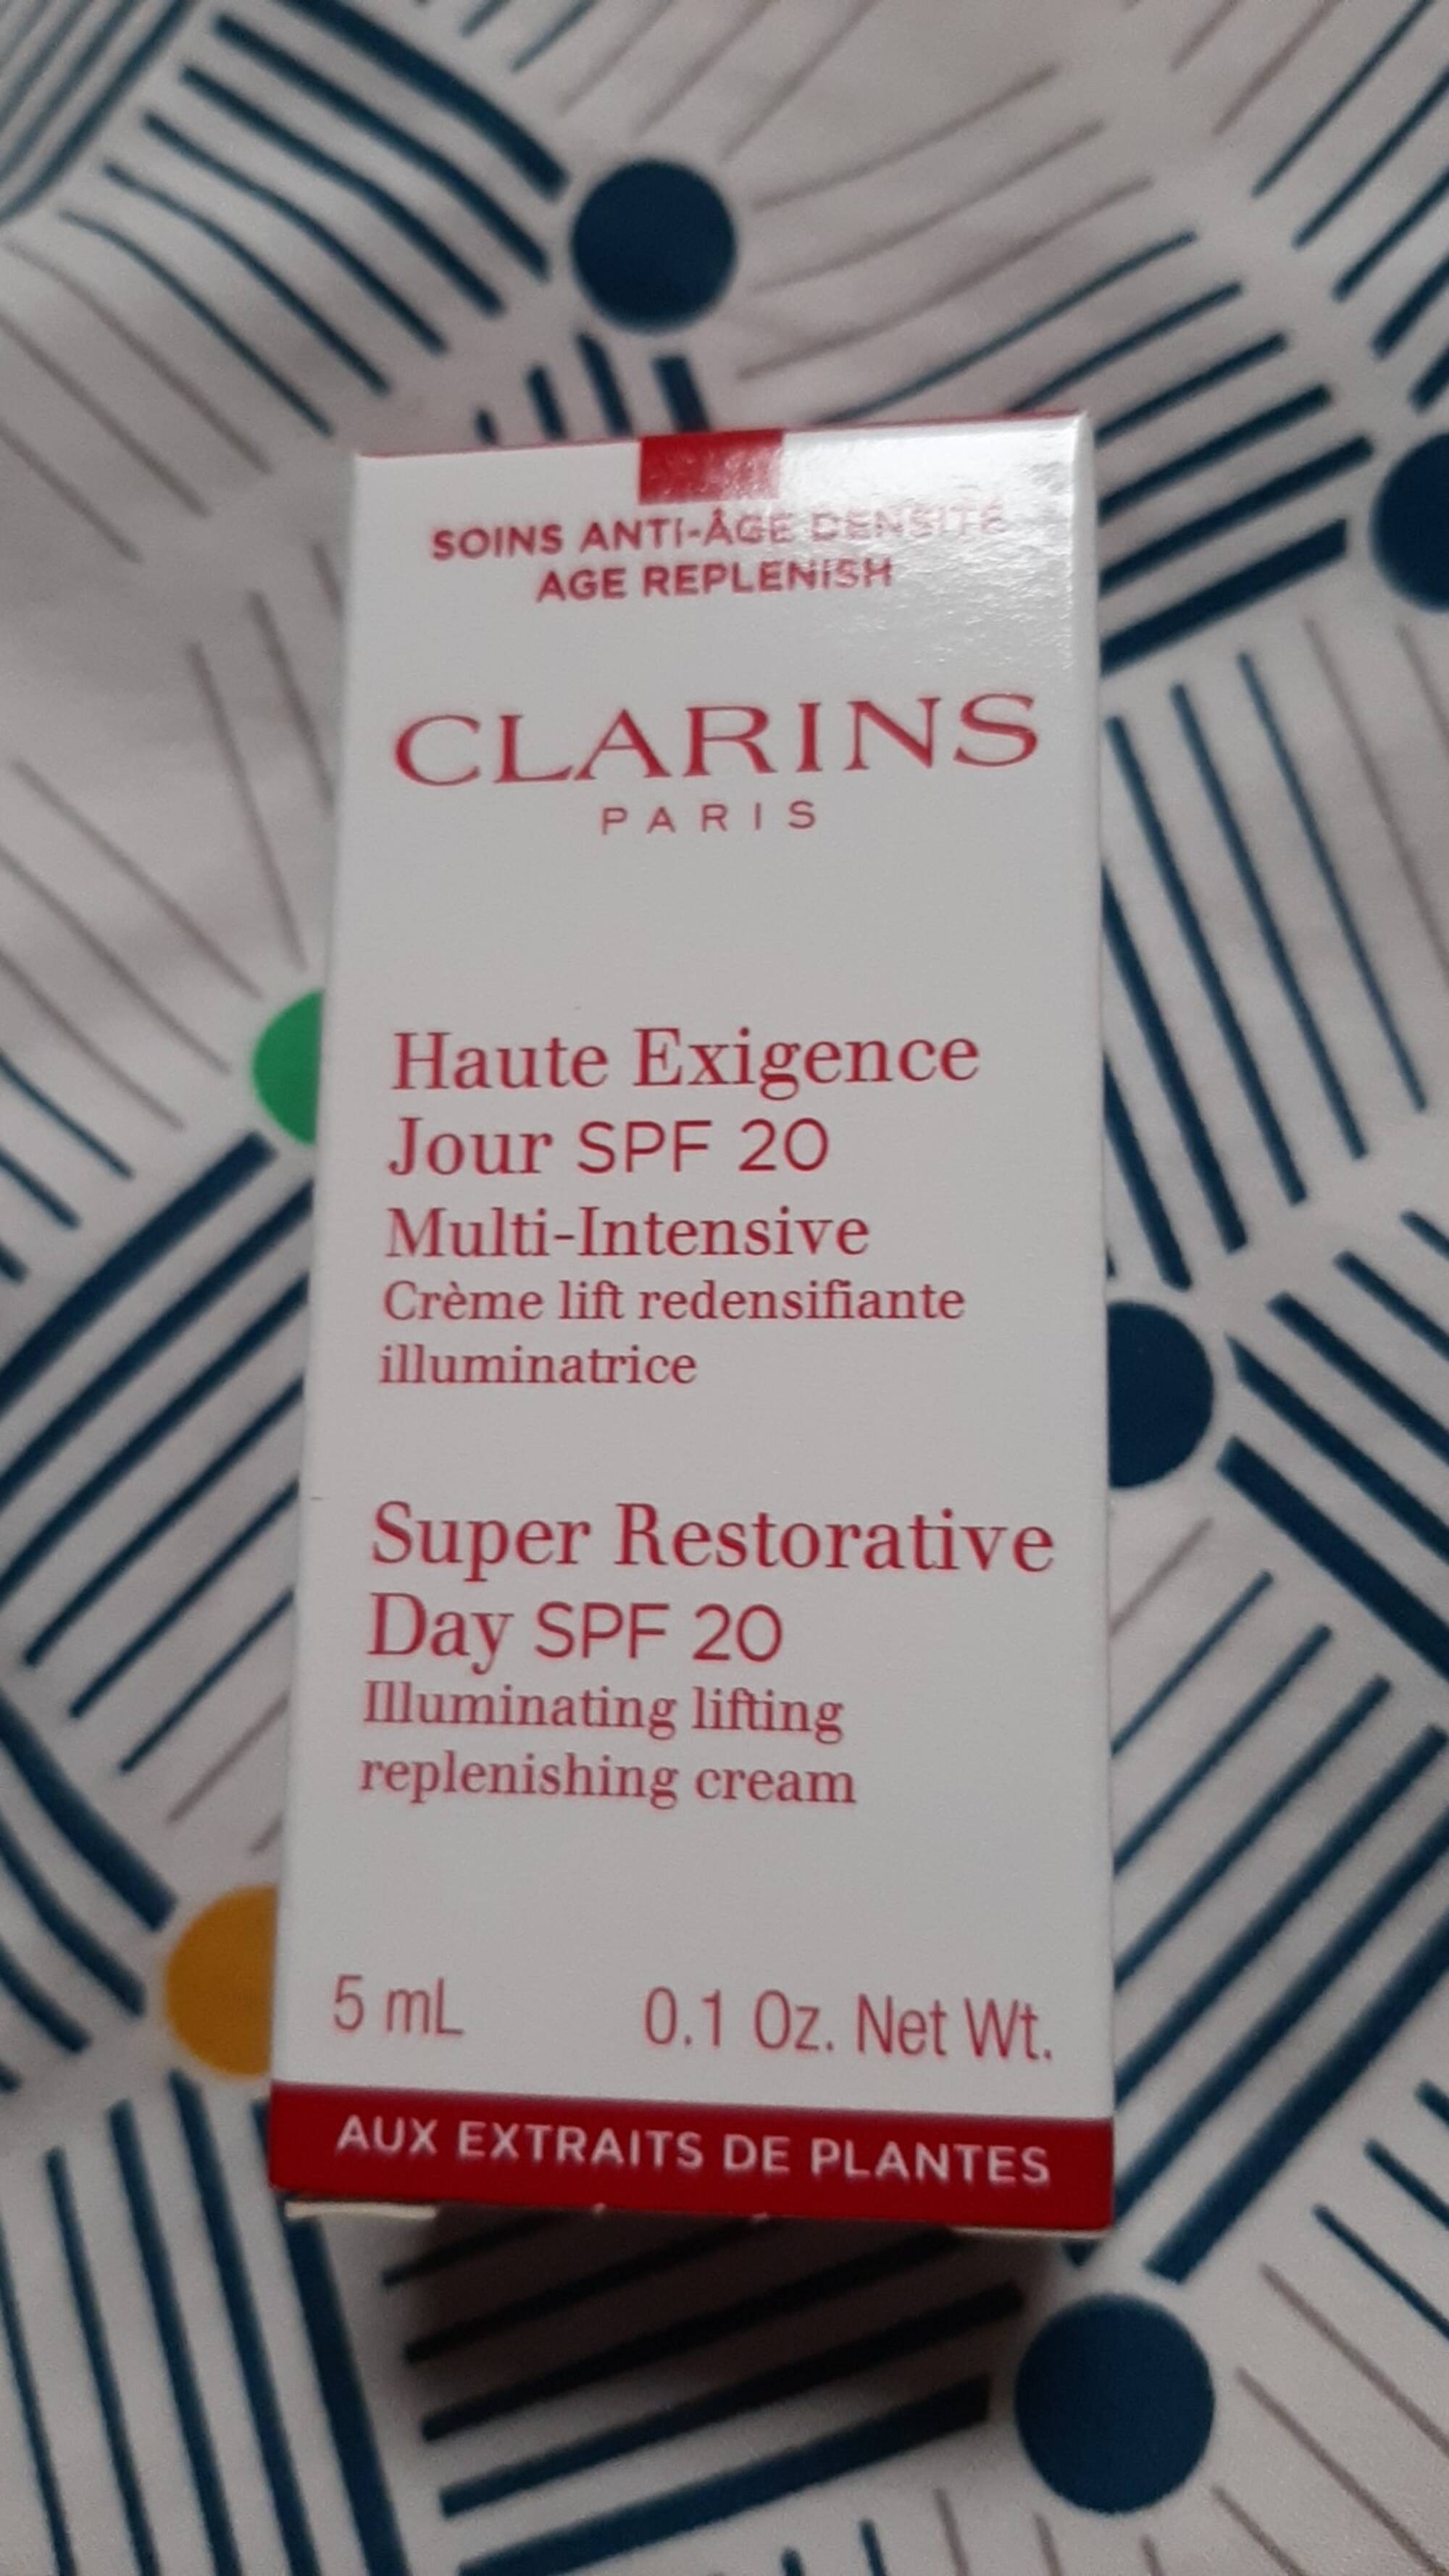 CLARINS - Haute exigence - Crème lift redensifiante illuminatrice